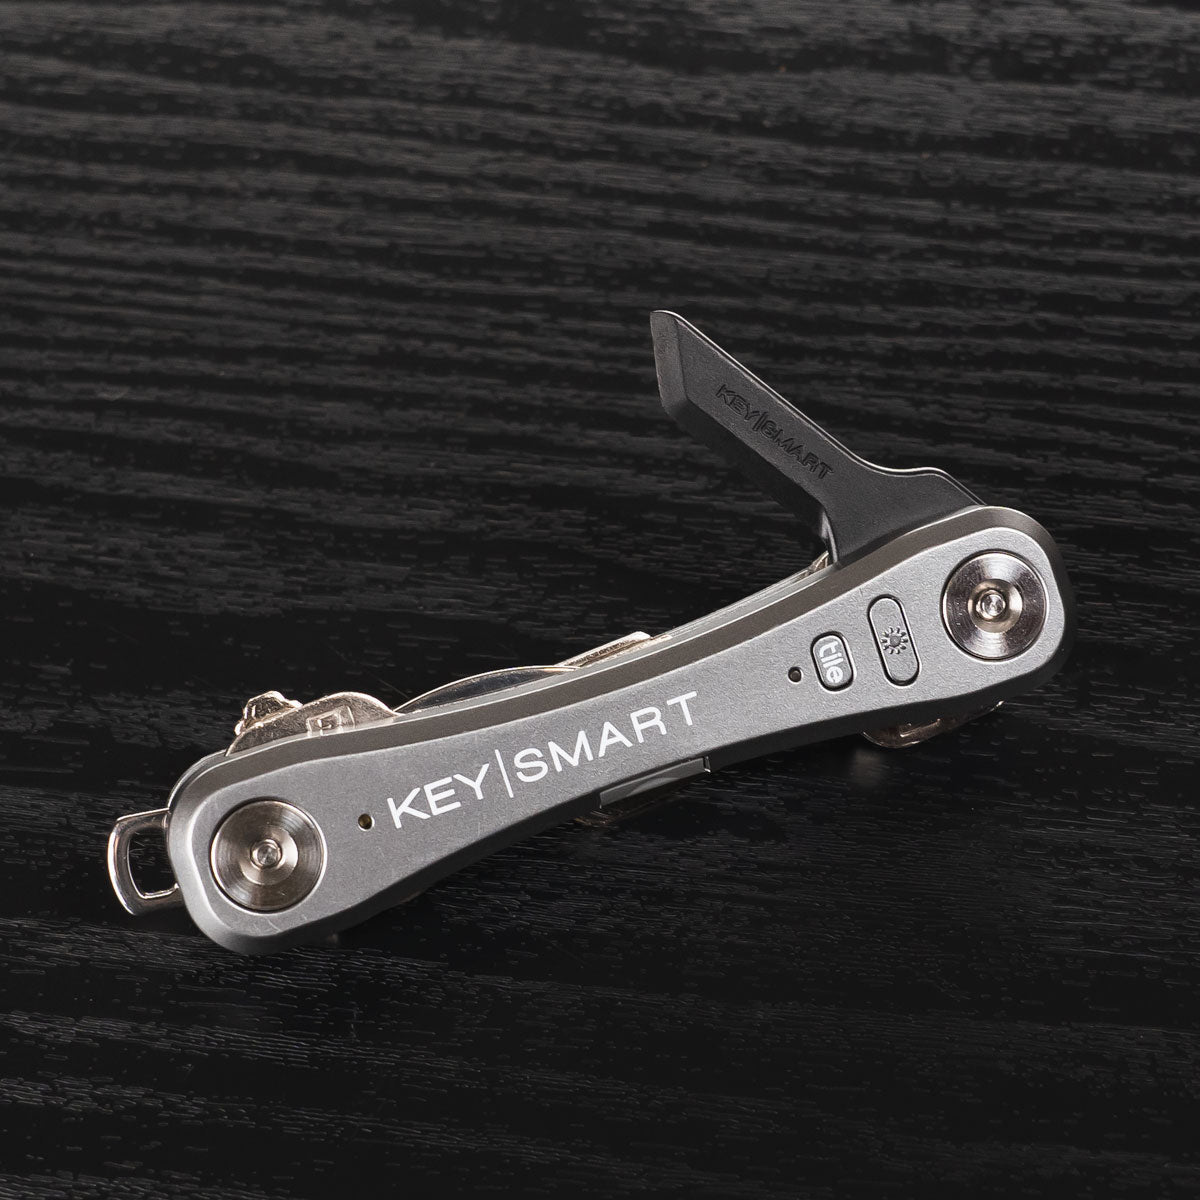 KeySmart KS820-BLK SafeBlade Keychain Box Cutter